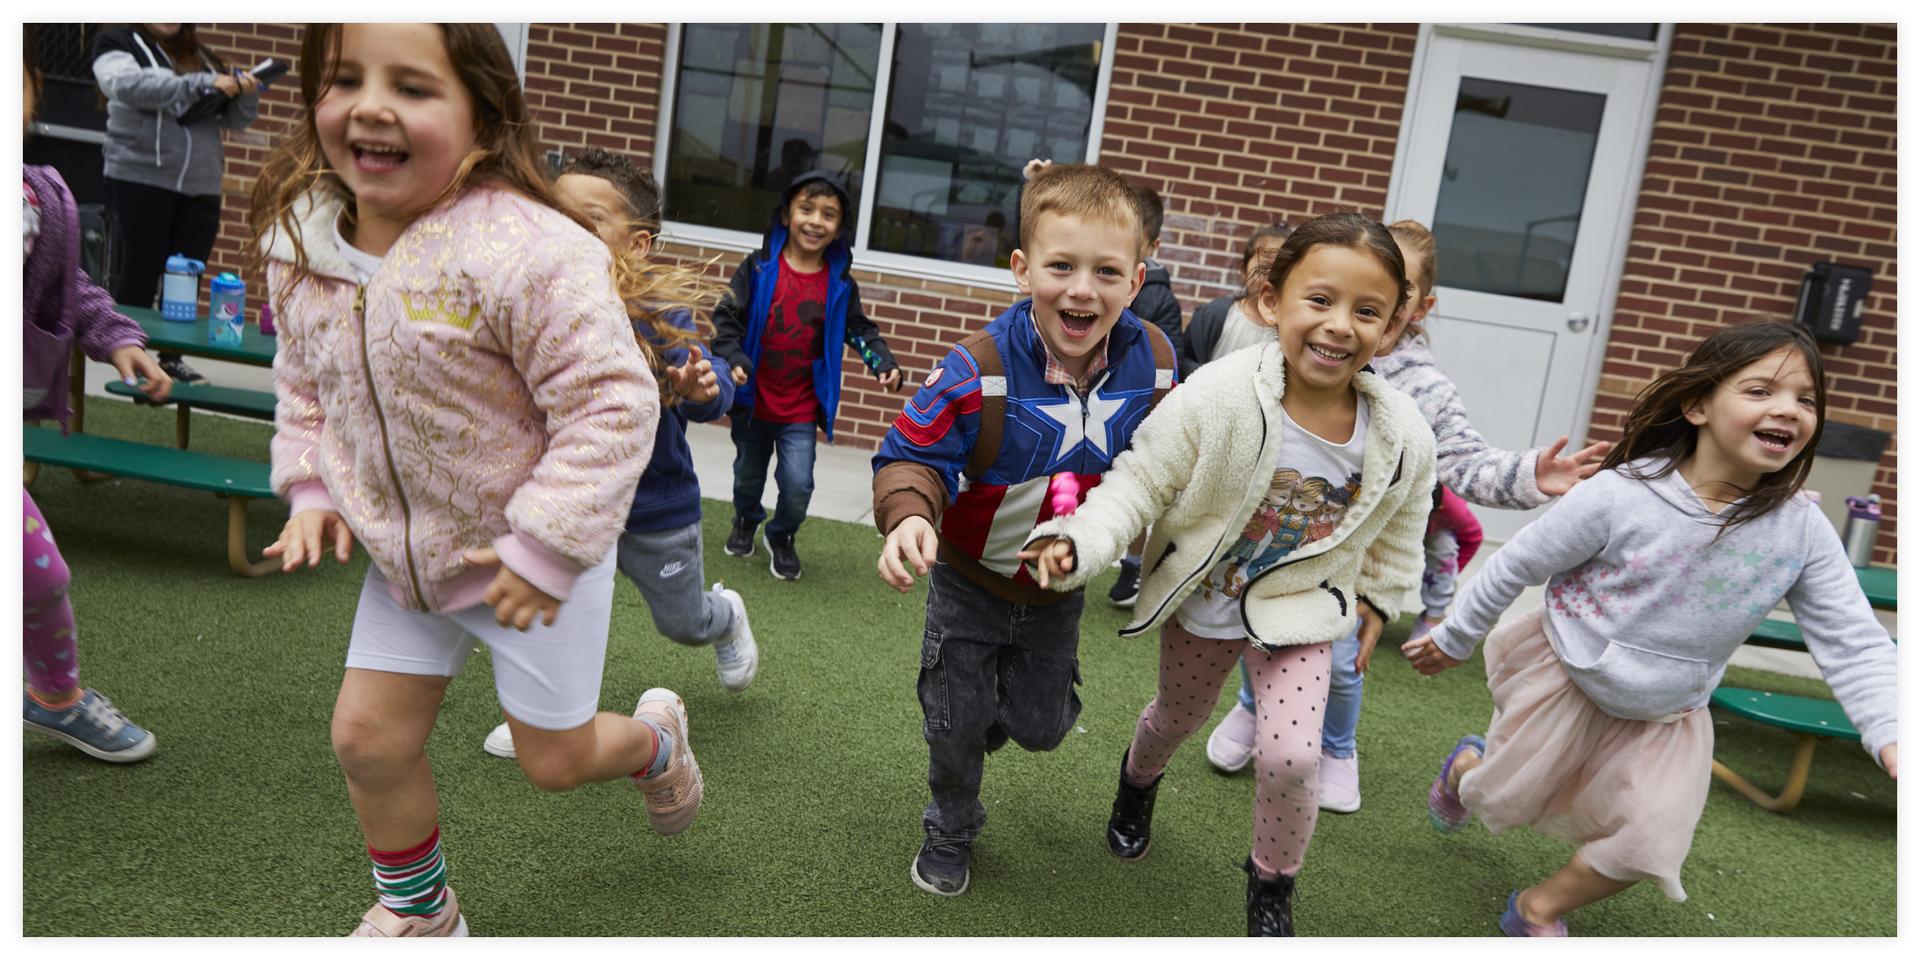 Group of happy children running outside